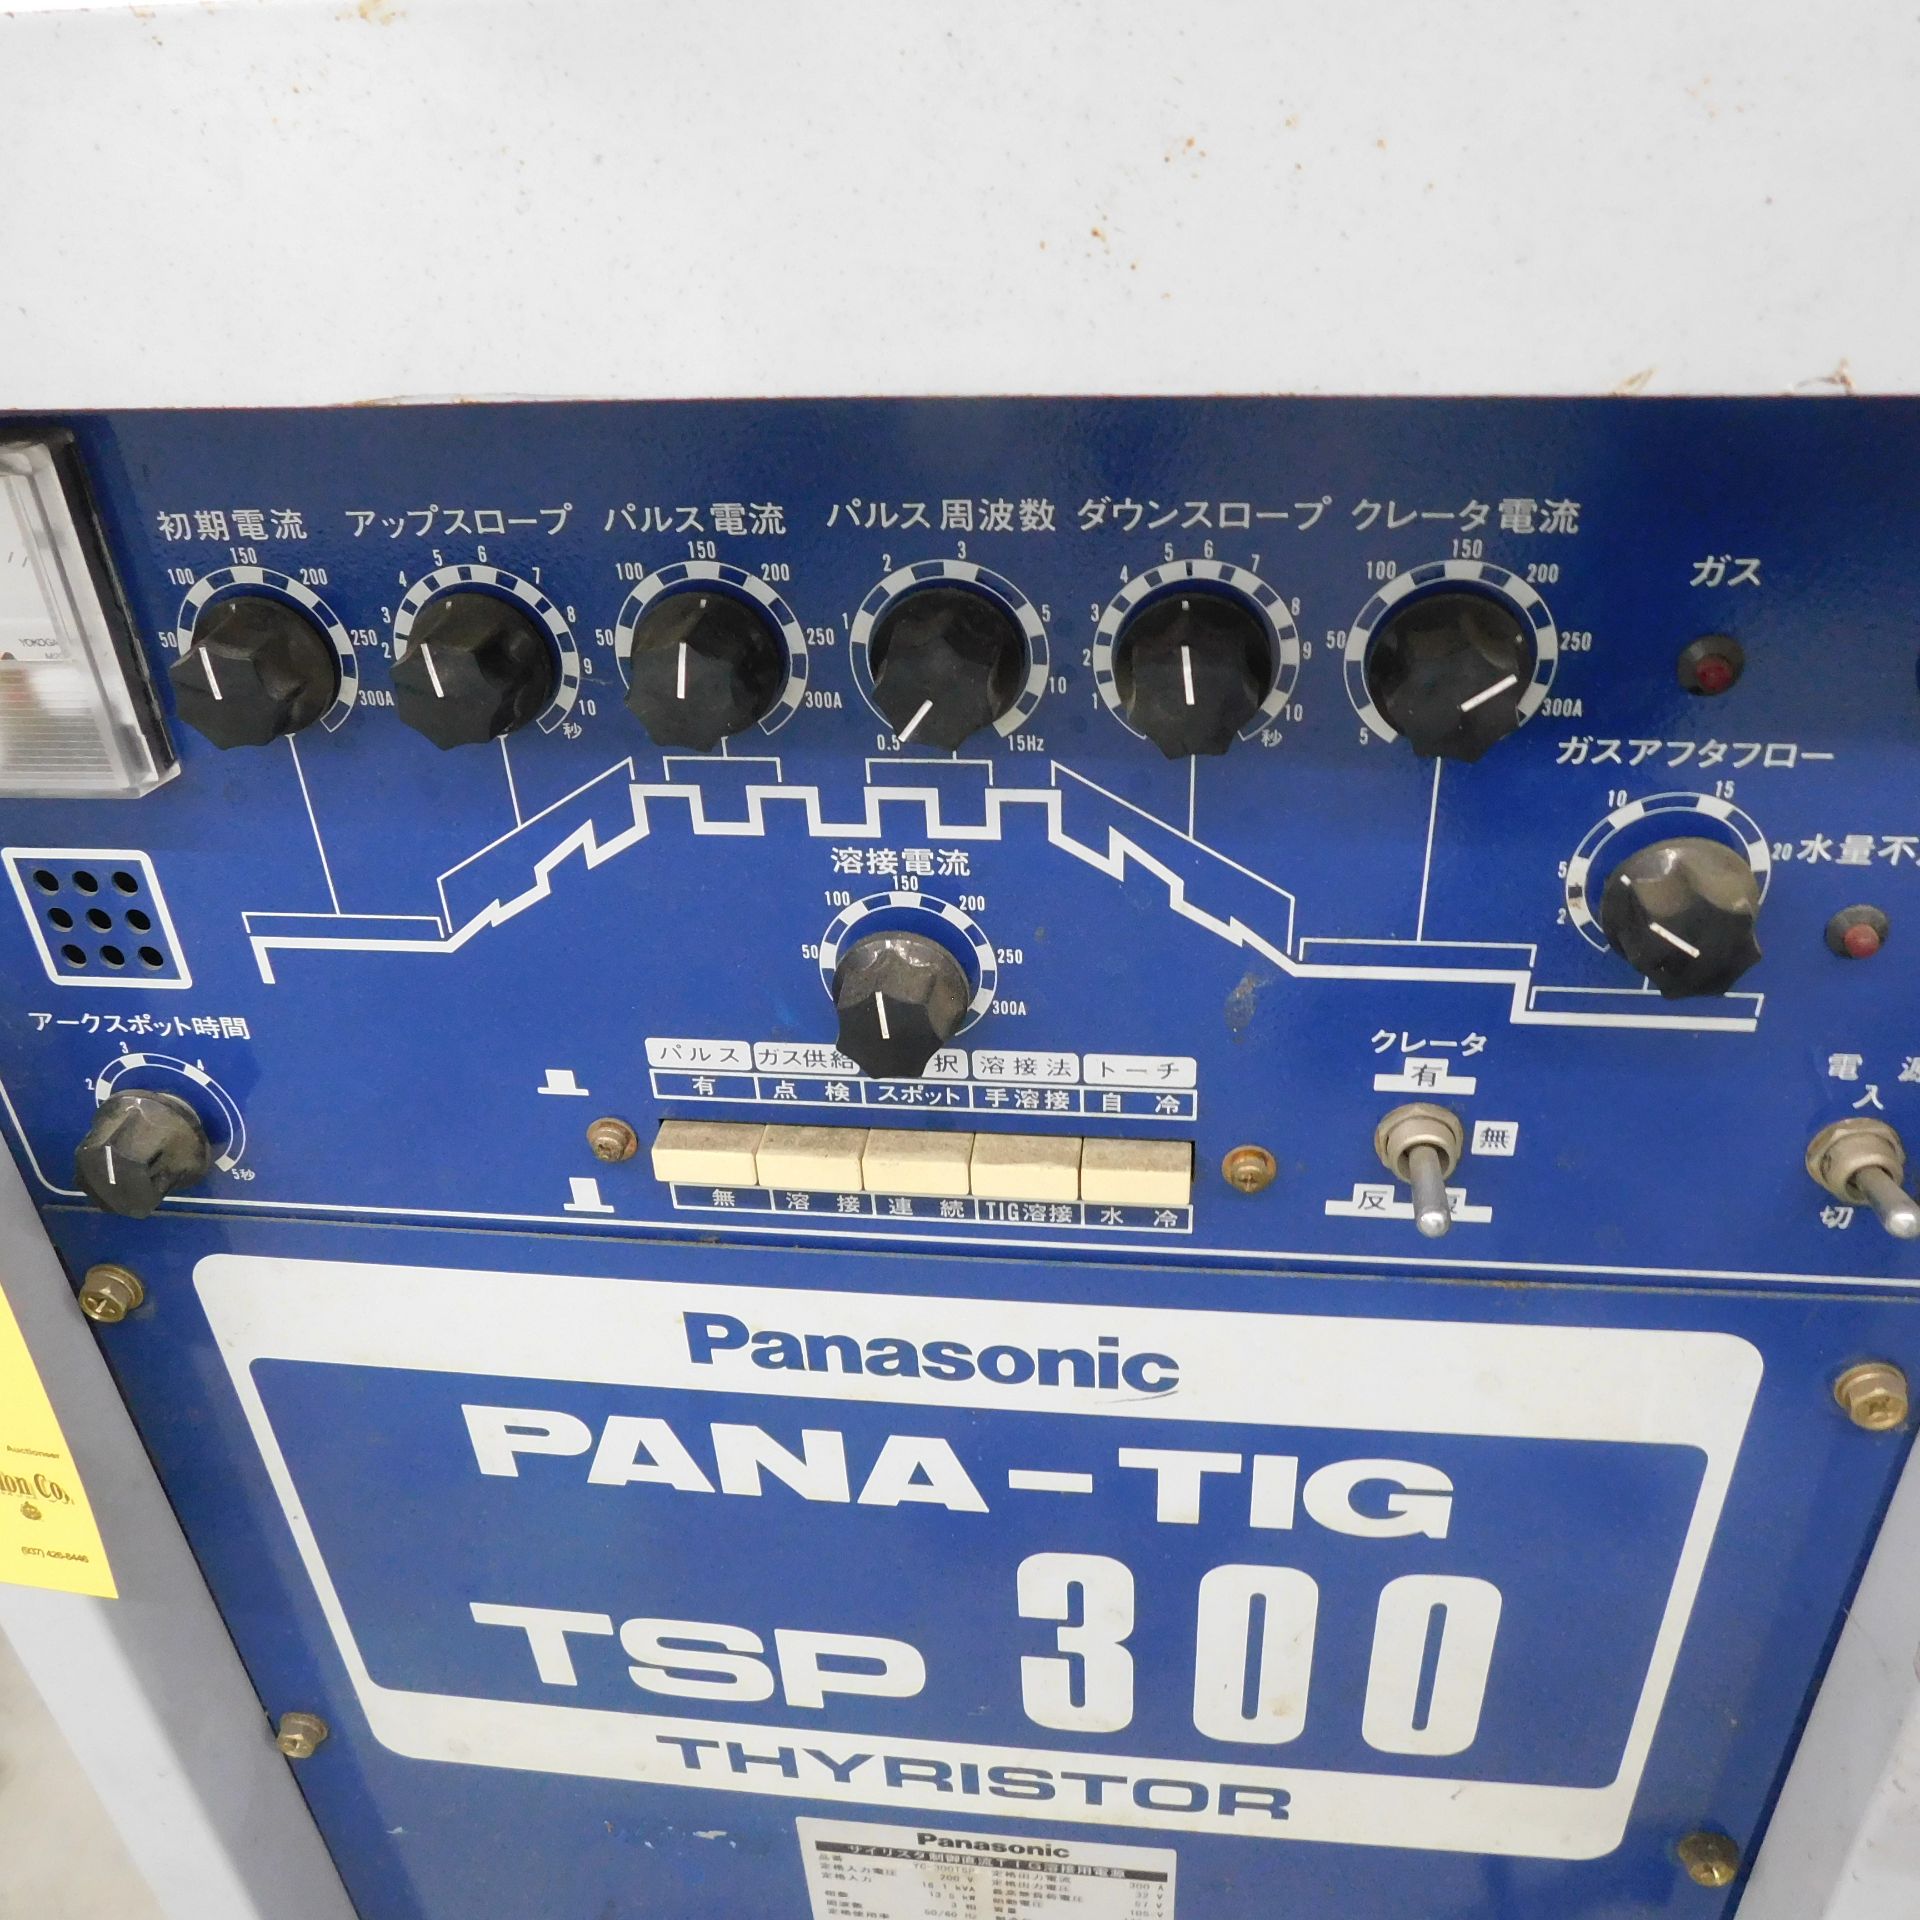 Panasonic TSP-300 Pana-Tig Tig Welder, s/n E0926, New 2003 - Image 2 of 3